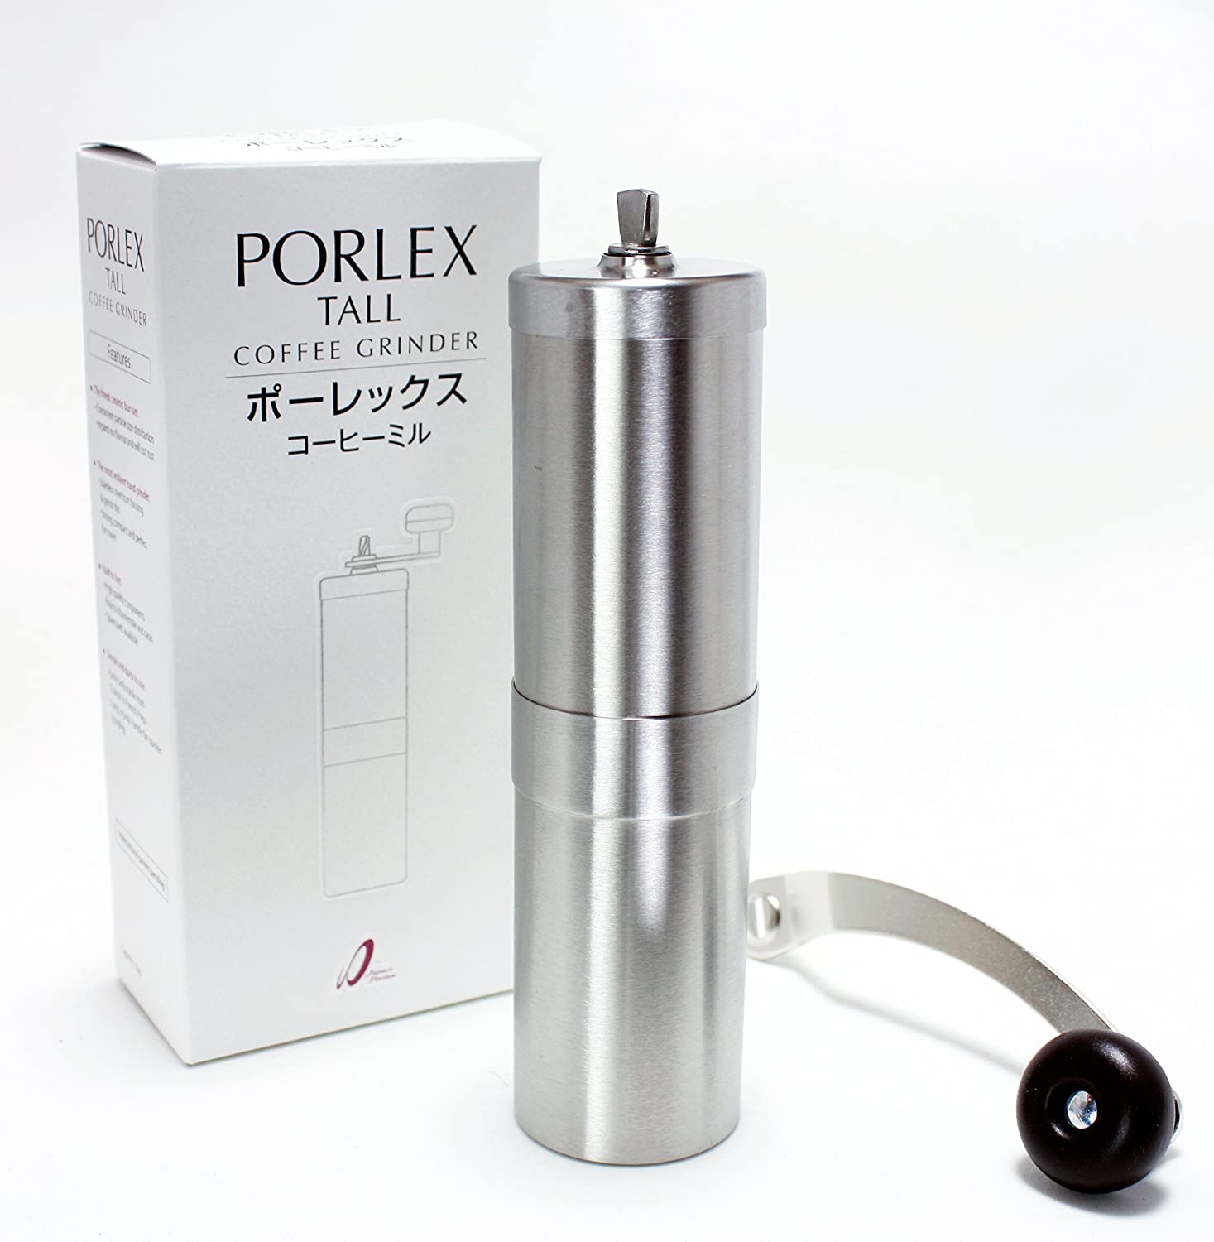 PORLEX(ポーレックス) ポーレックス コーヒーミルⅡ シルバーの商品画像サムネ5 